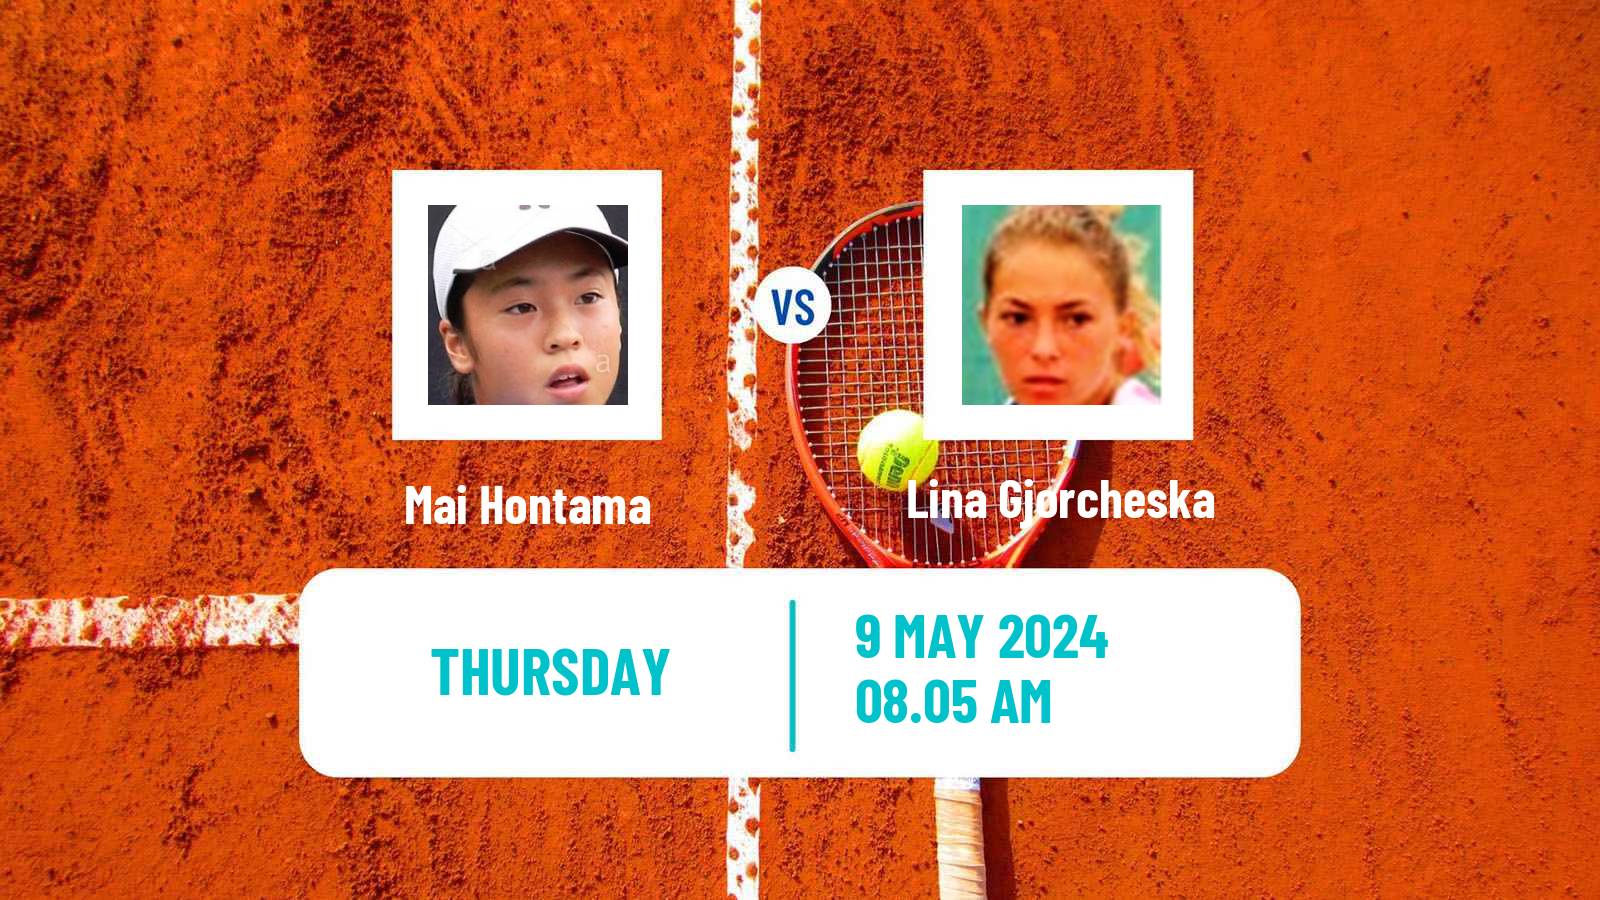 Tennis ITF W75 Trnava 2 Women Mai Hontama - Lina Gjorcheska